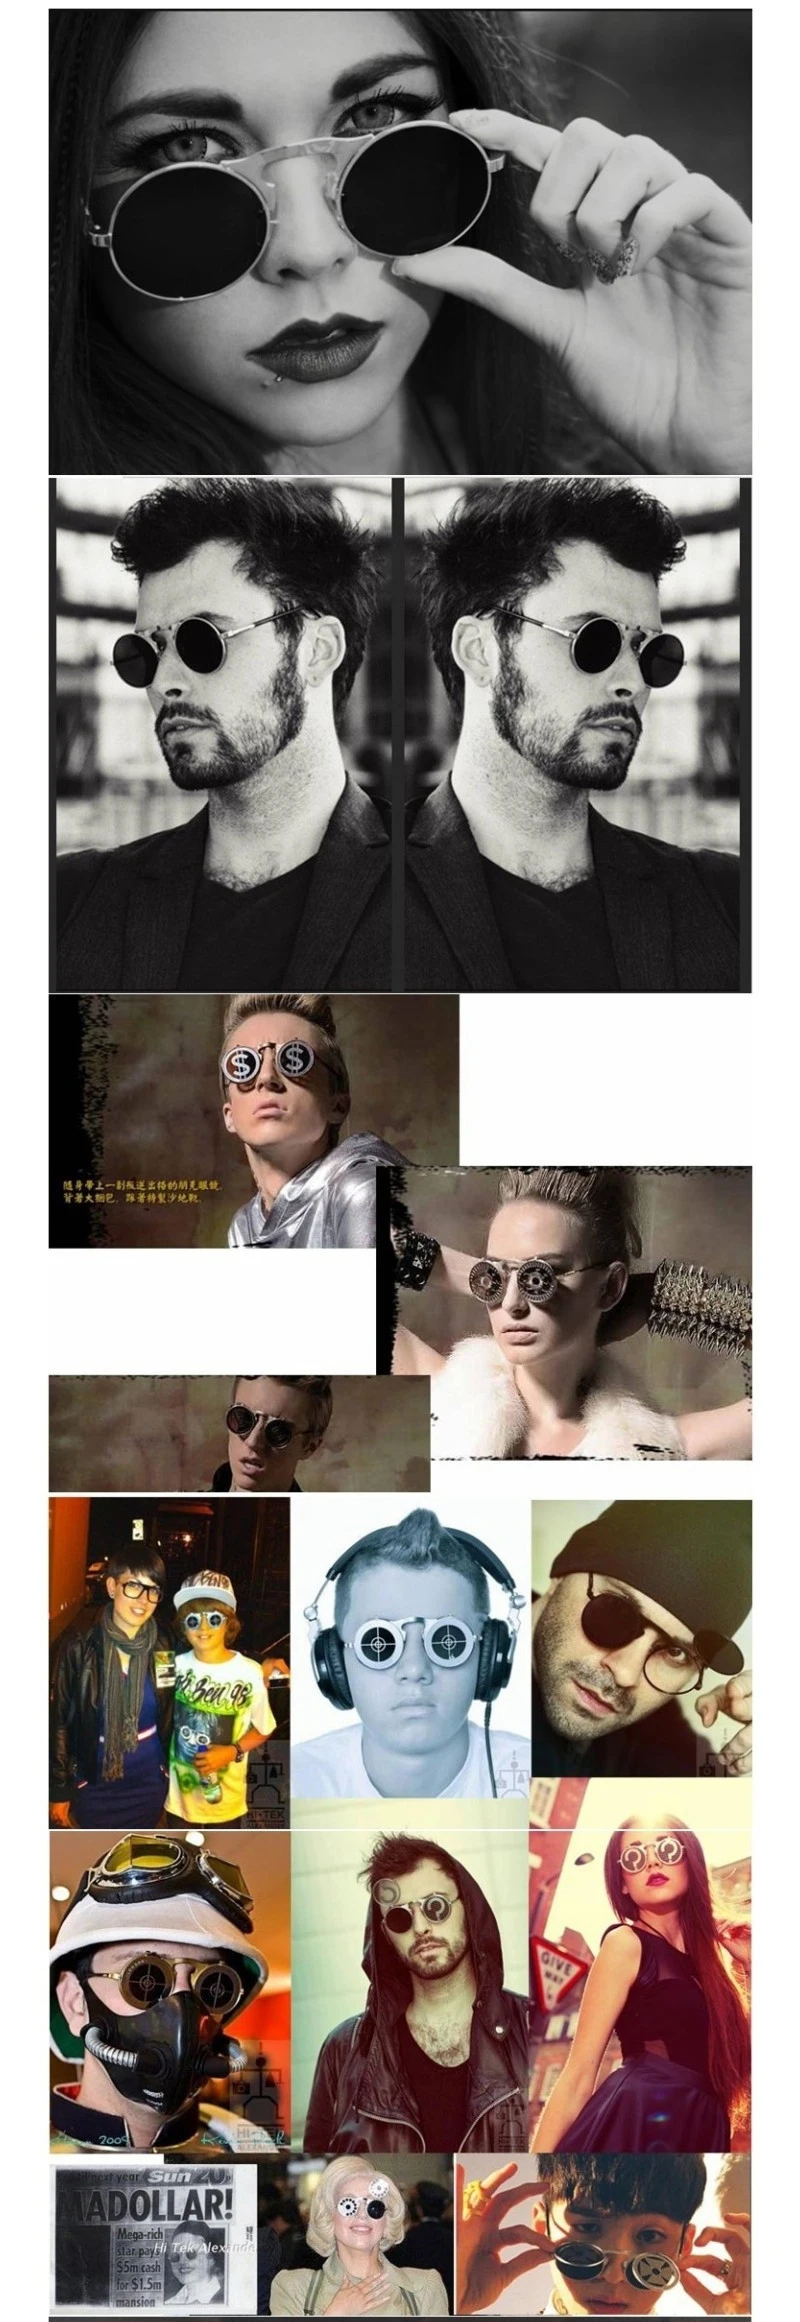 Luxury Oculos De Sol Customized Women Men Pattern Spring Filp Round Sunglasses